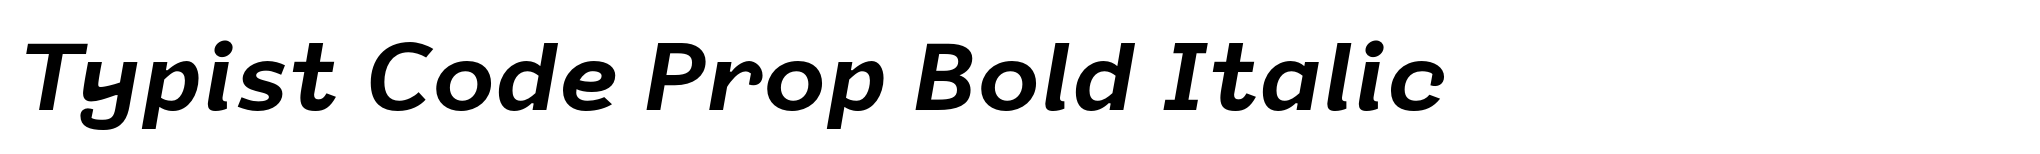 Typist Code Prop Bold Italic image